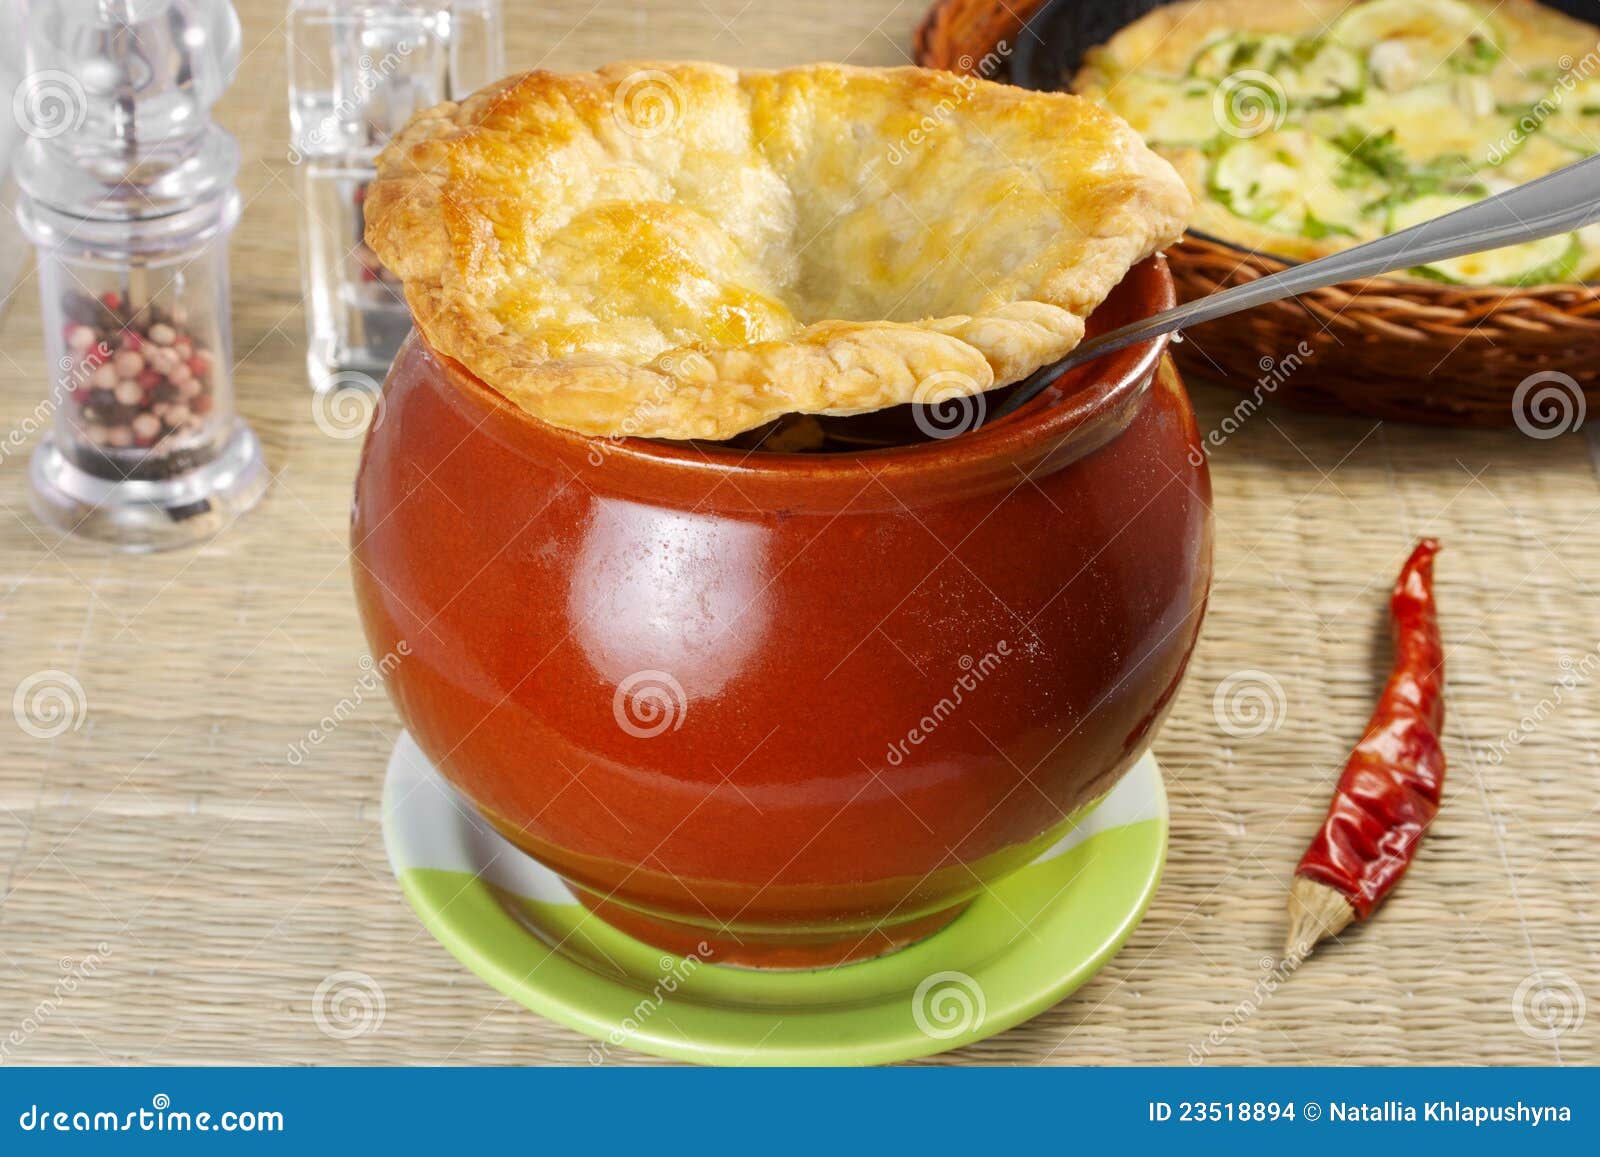 beef stew in a crock pot